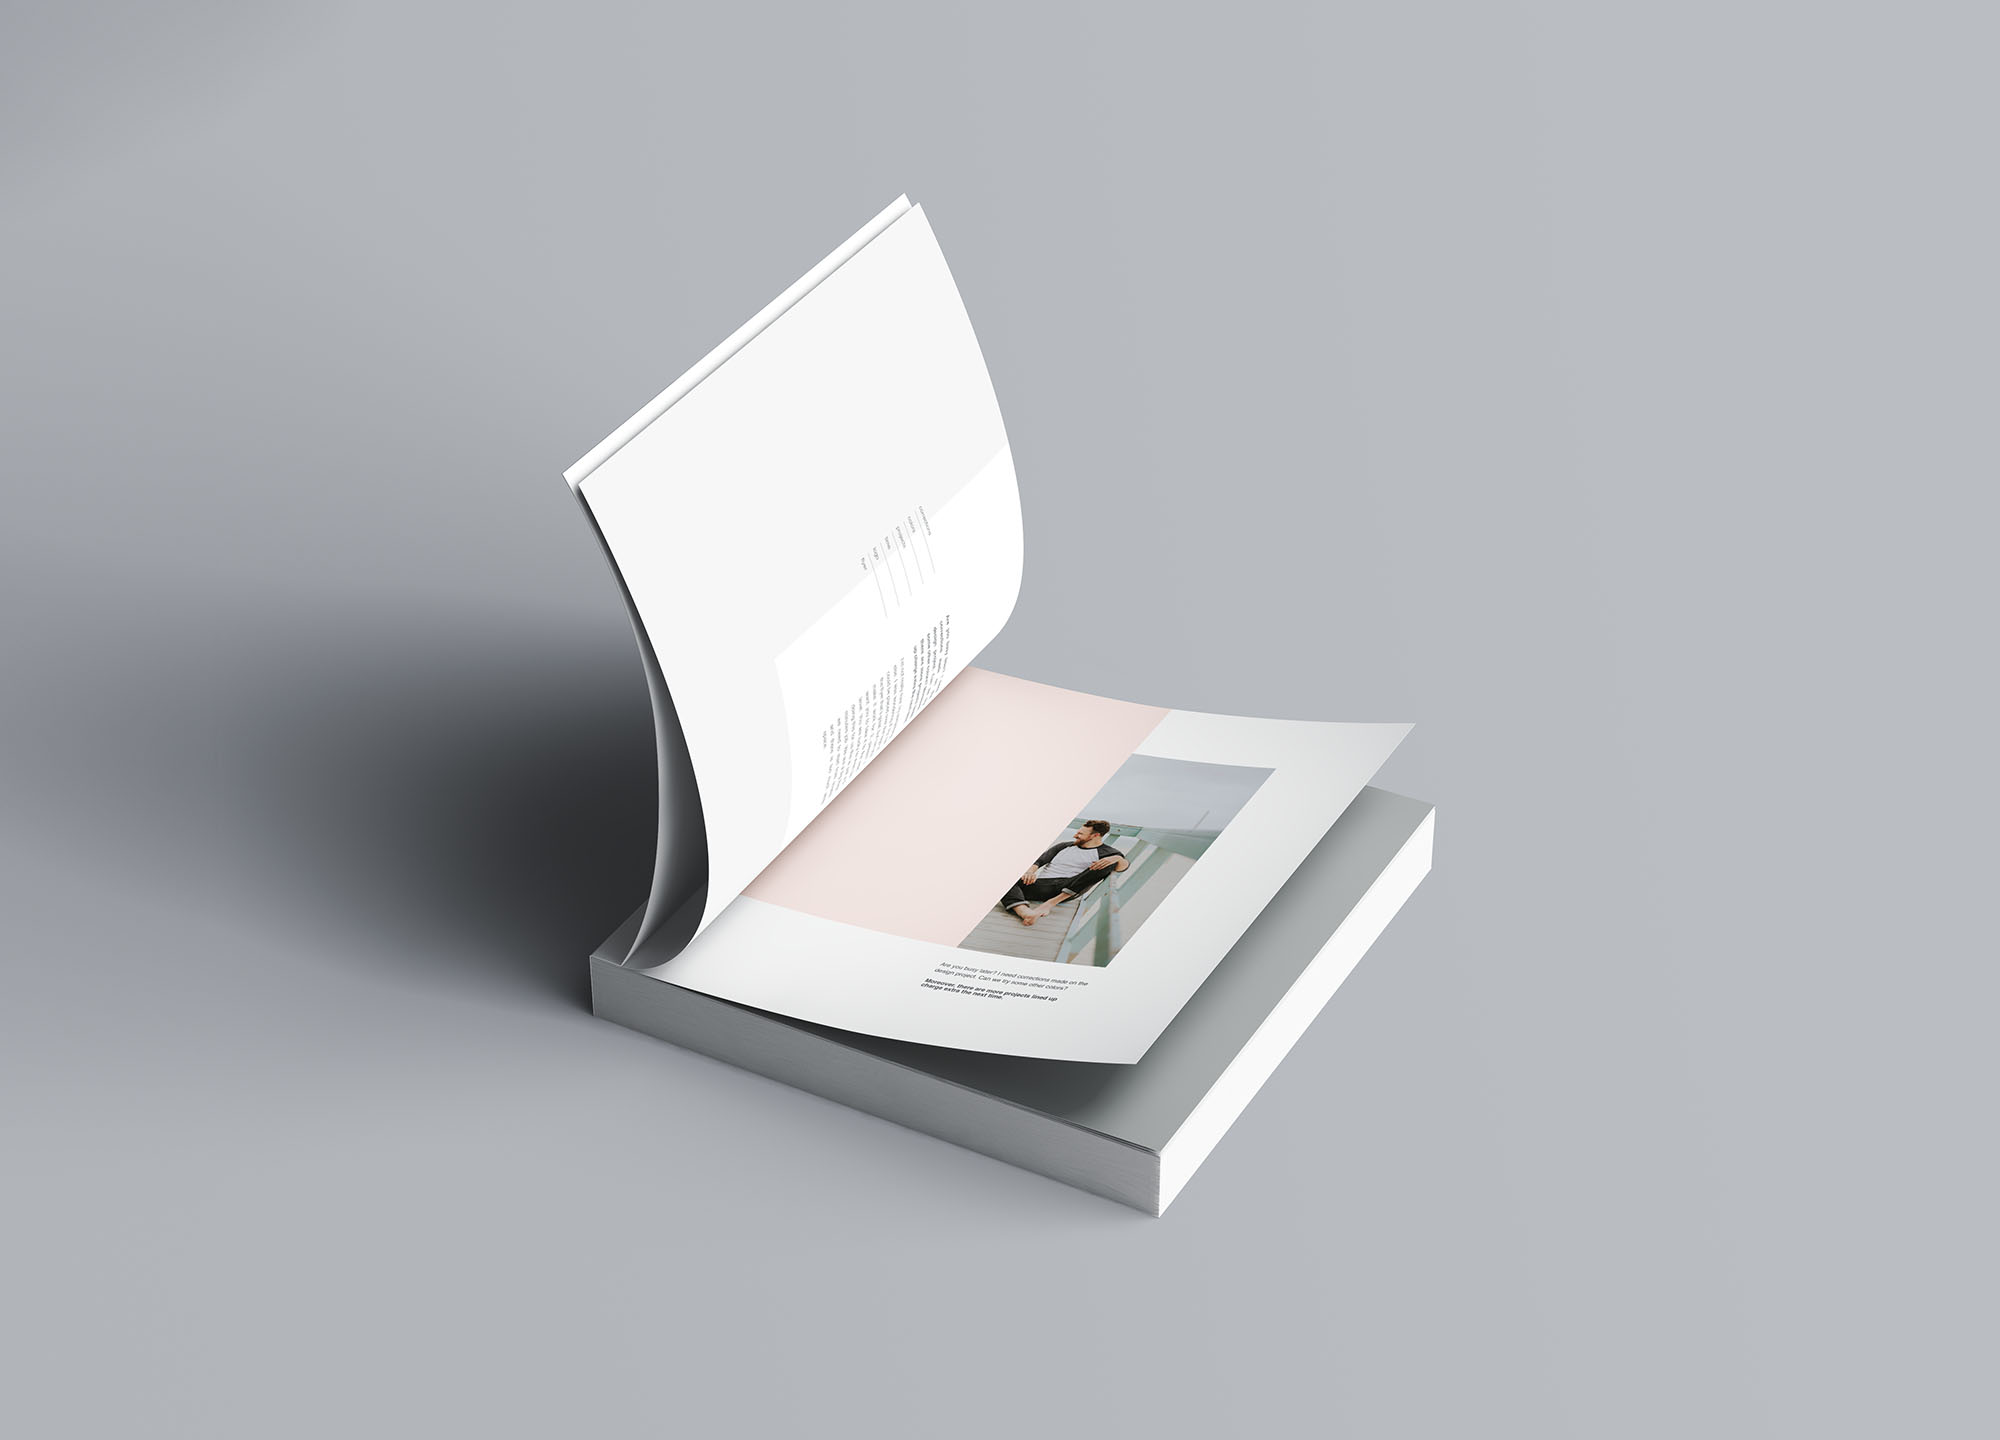 方形软封图书内页版式设计效果图样机大洋岛精选 Square Softcover Book Mockup插图5